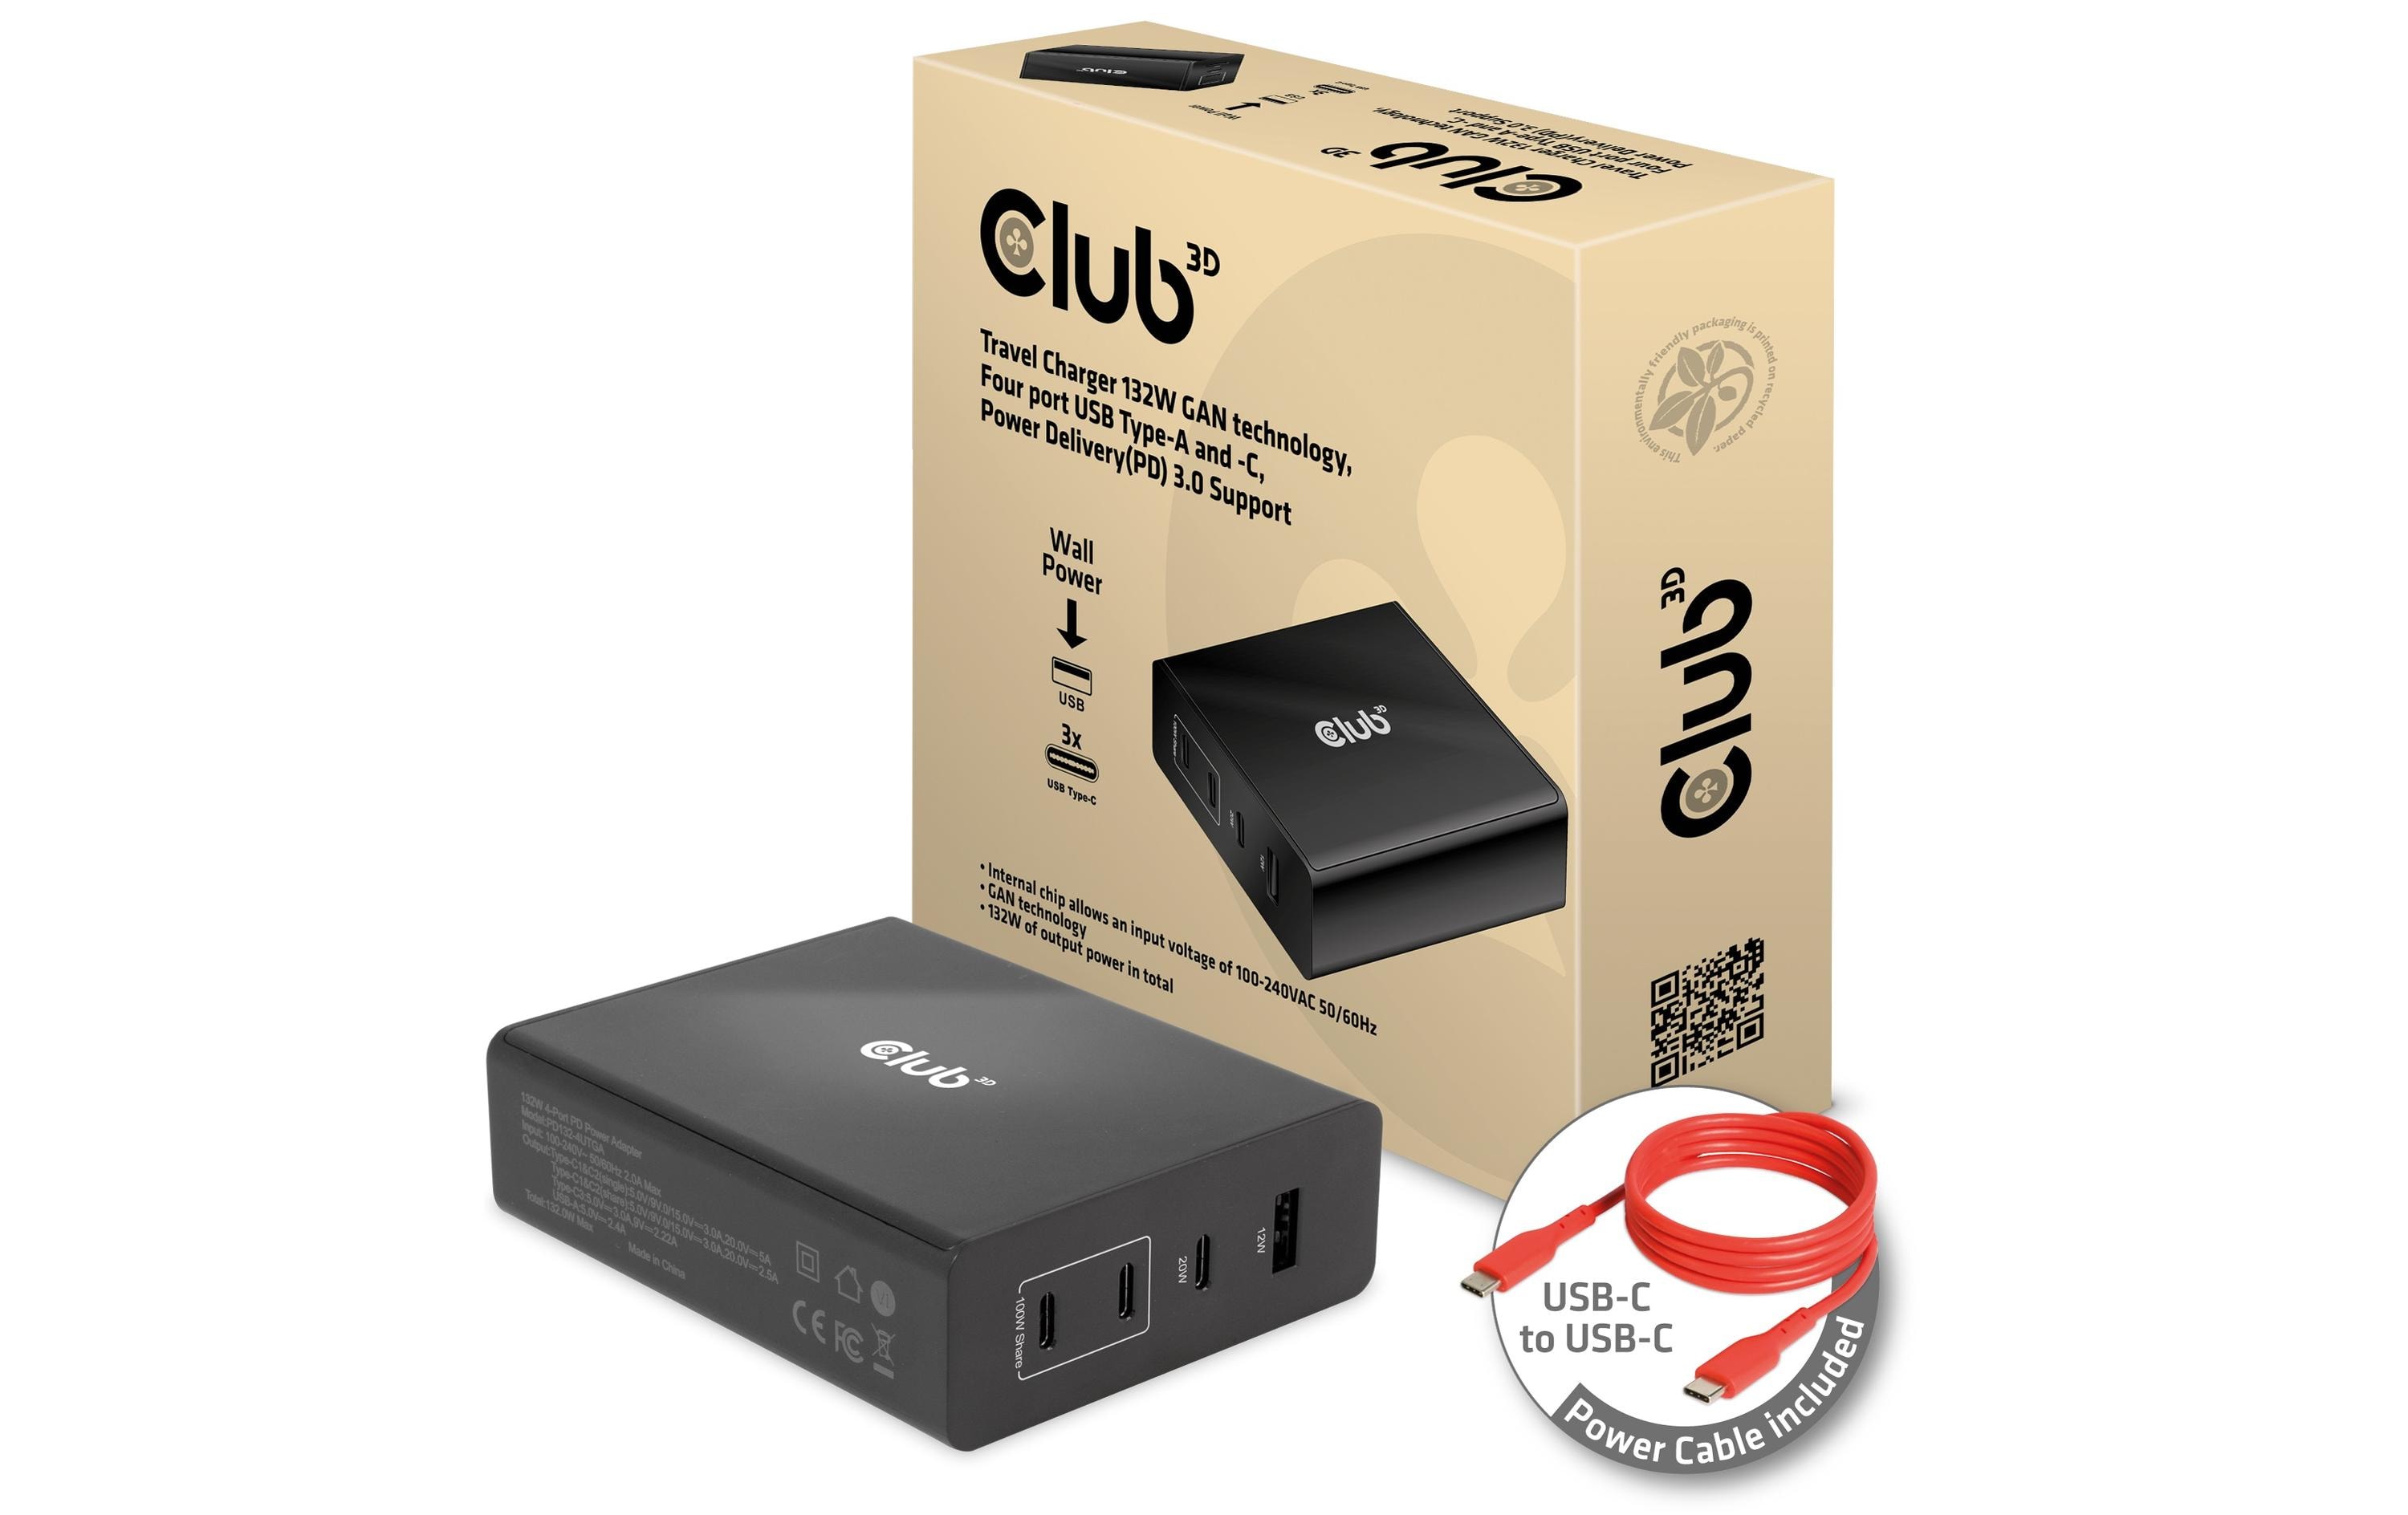 Club 3D USB-Wandladegerät CAC-1906